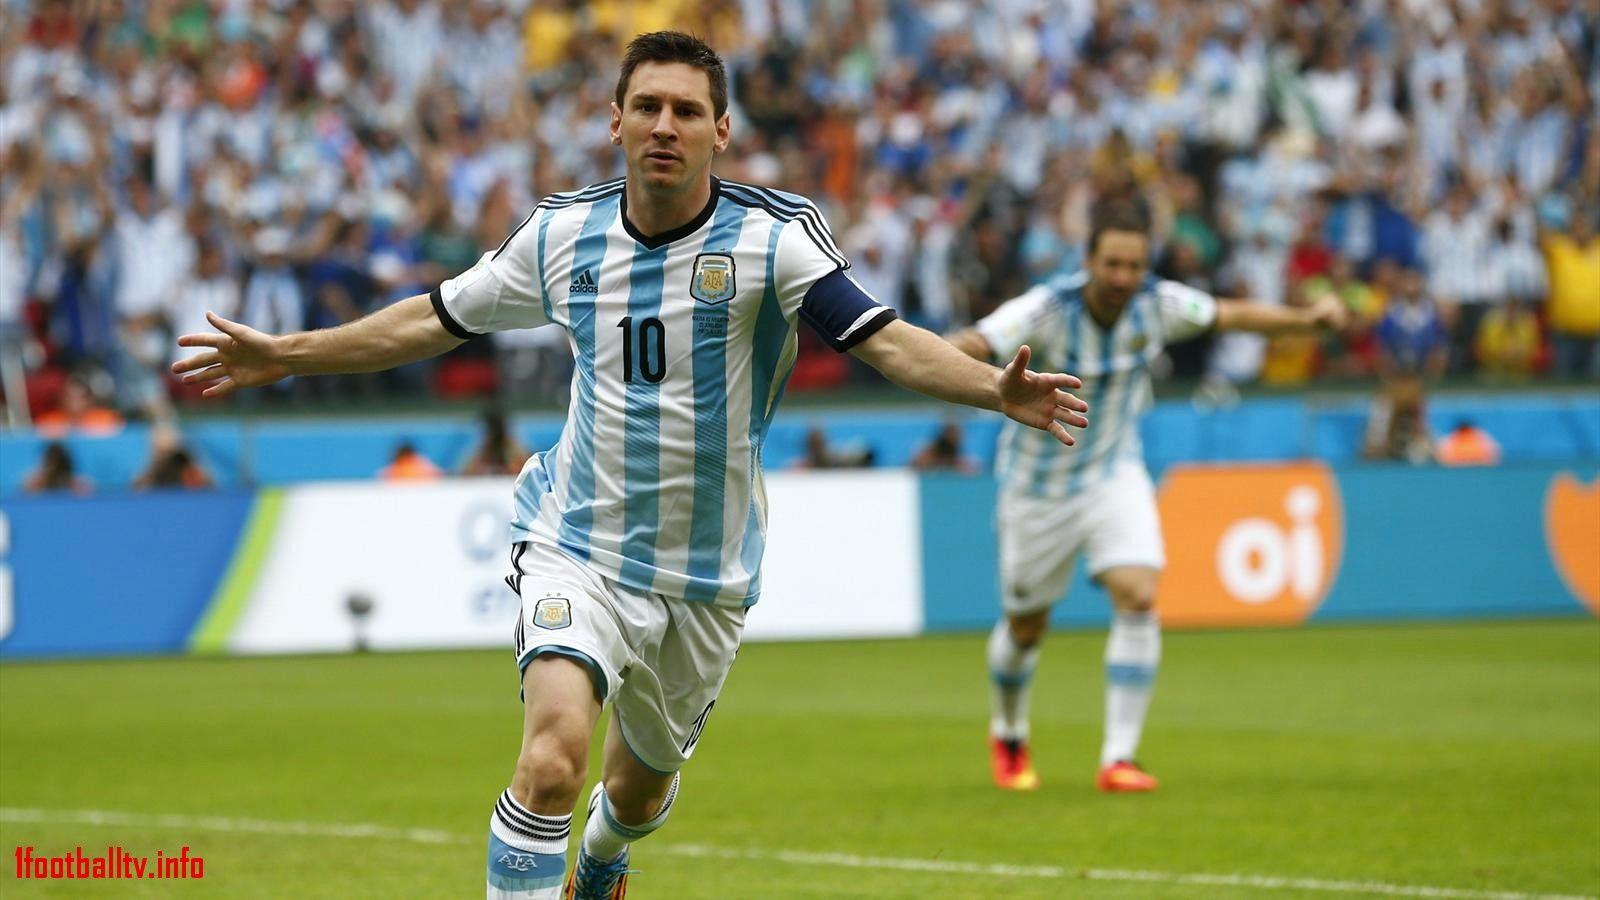 Inspirational Lionel Messi Capitan Argentina National Team Football